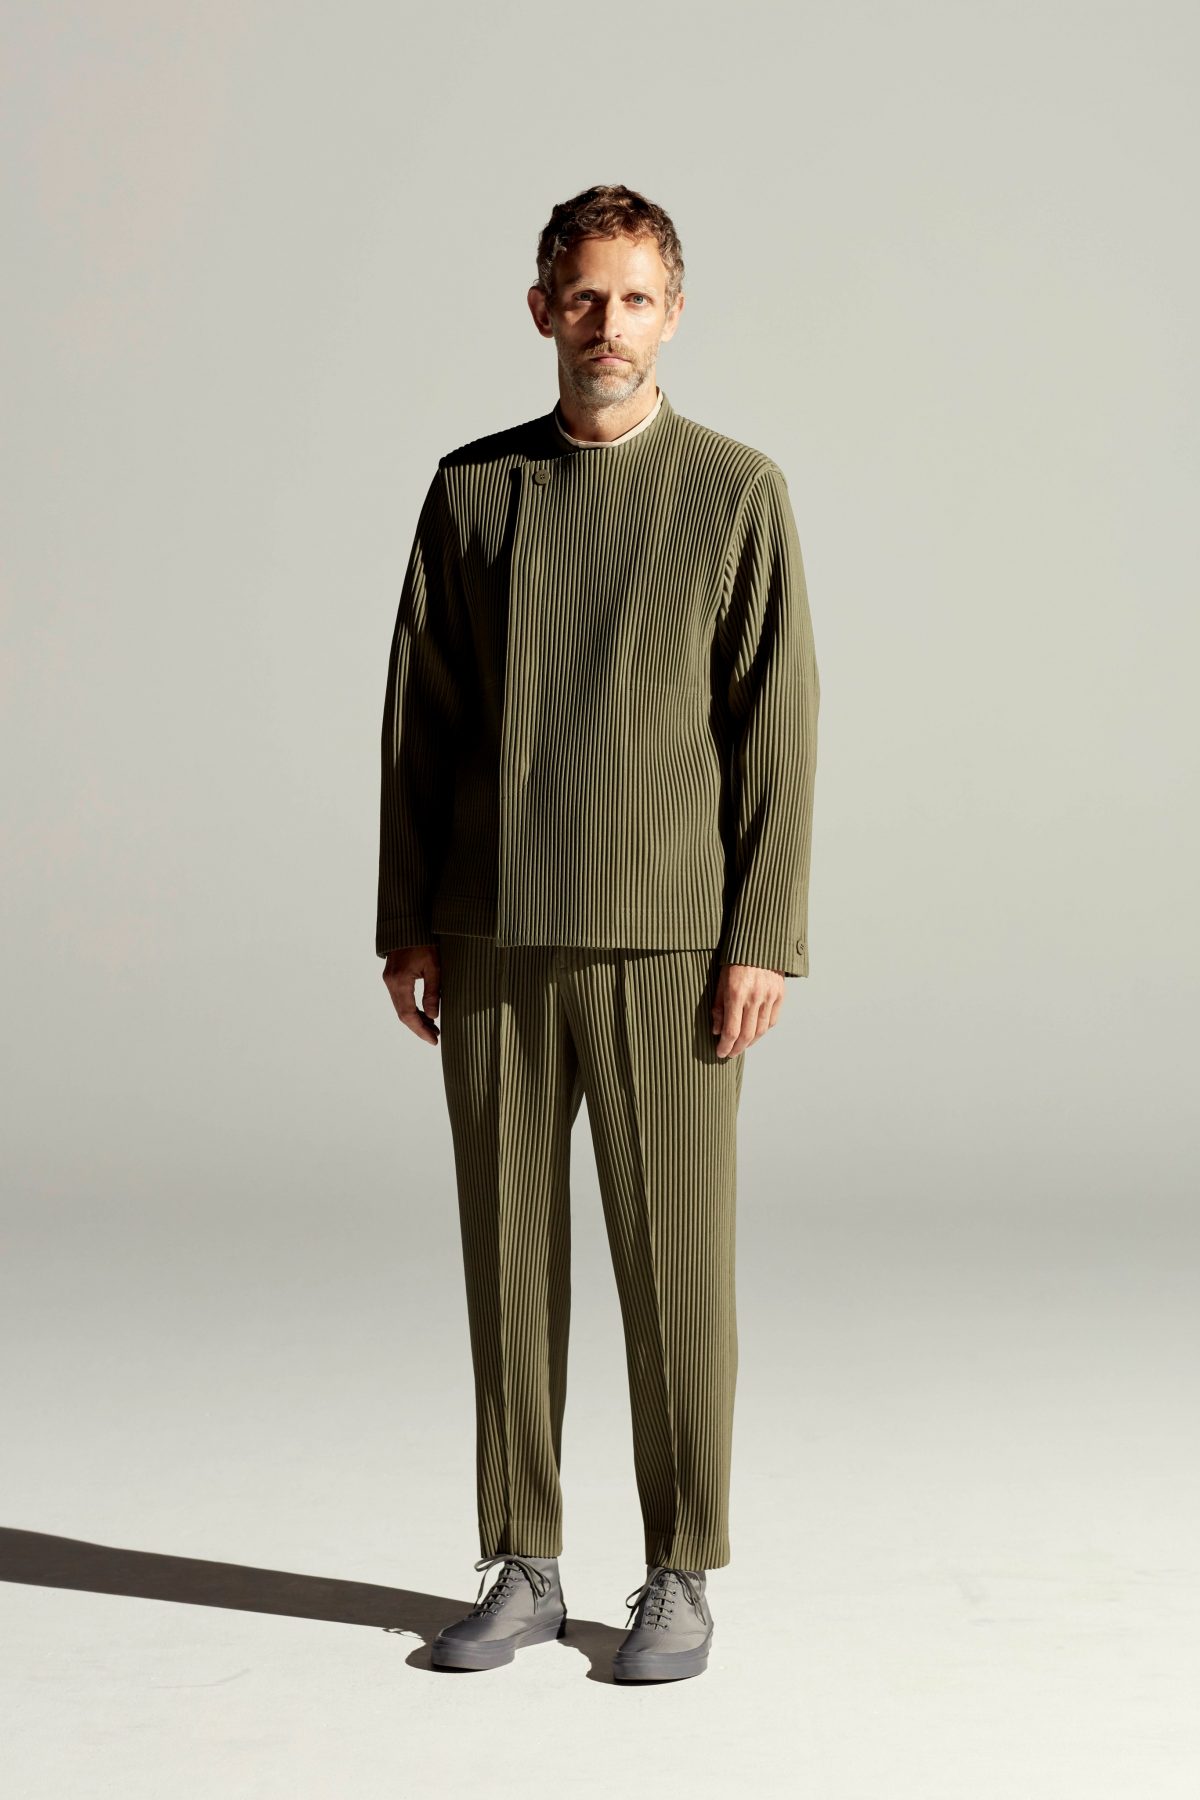 Homme Plissé Issey Miyake 以皺褶展現身體力量的美學｜ Spring 2022 Menswear – Vogue